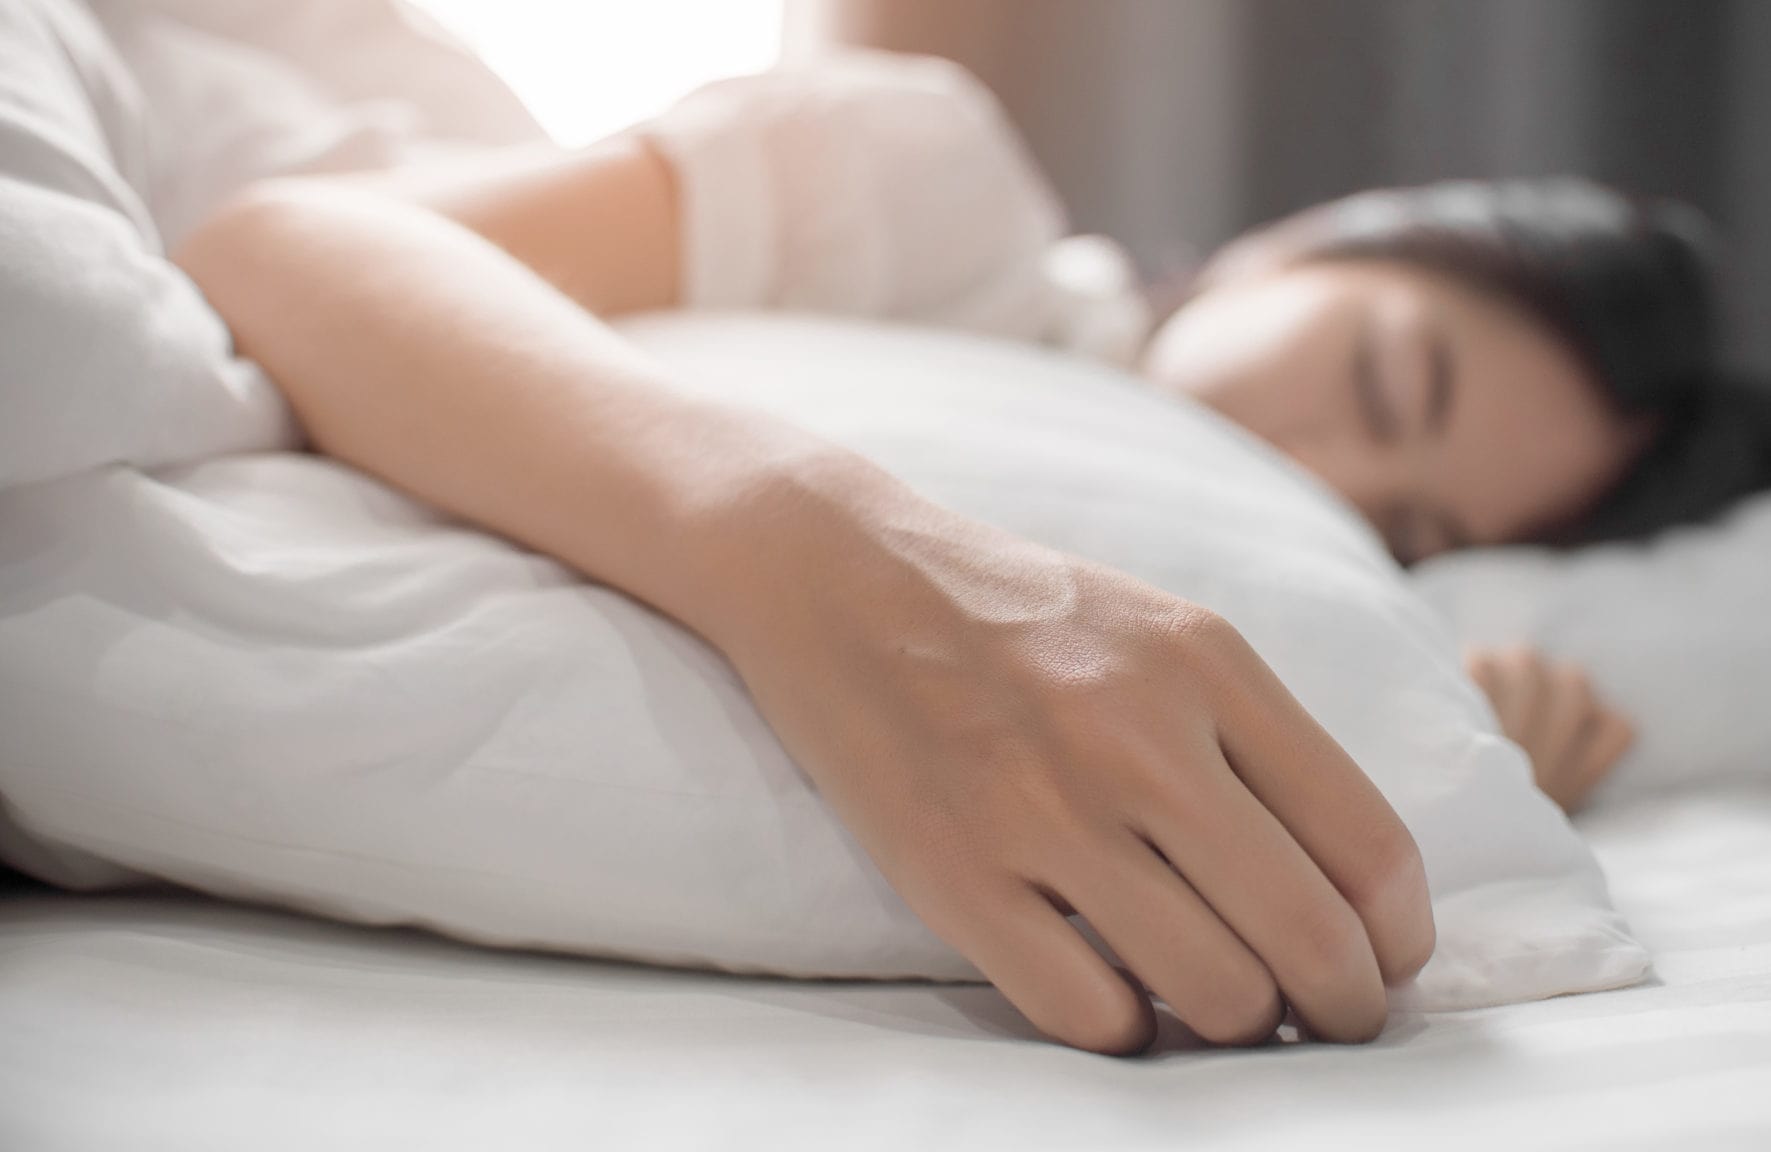 4 panacea ways to get good sleep